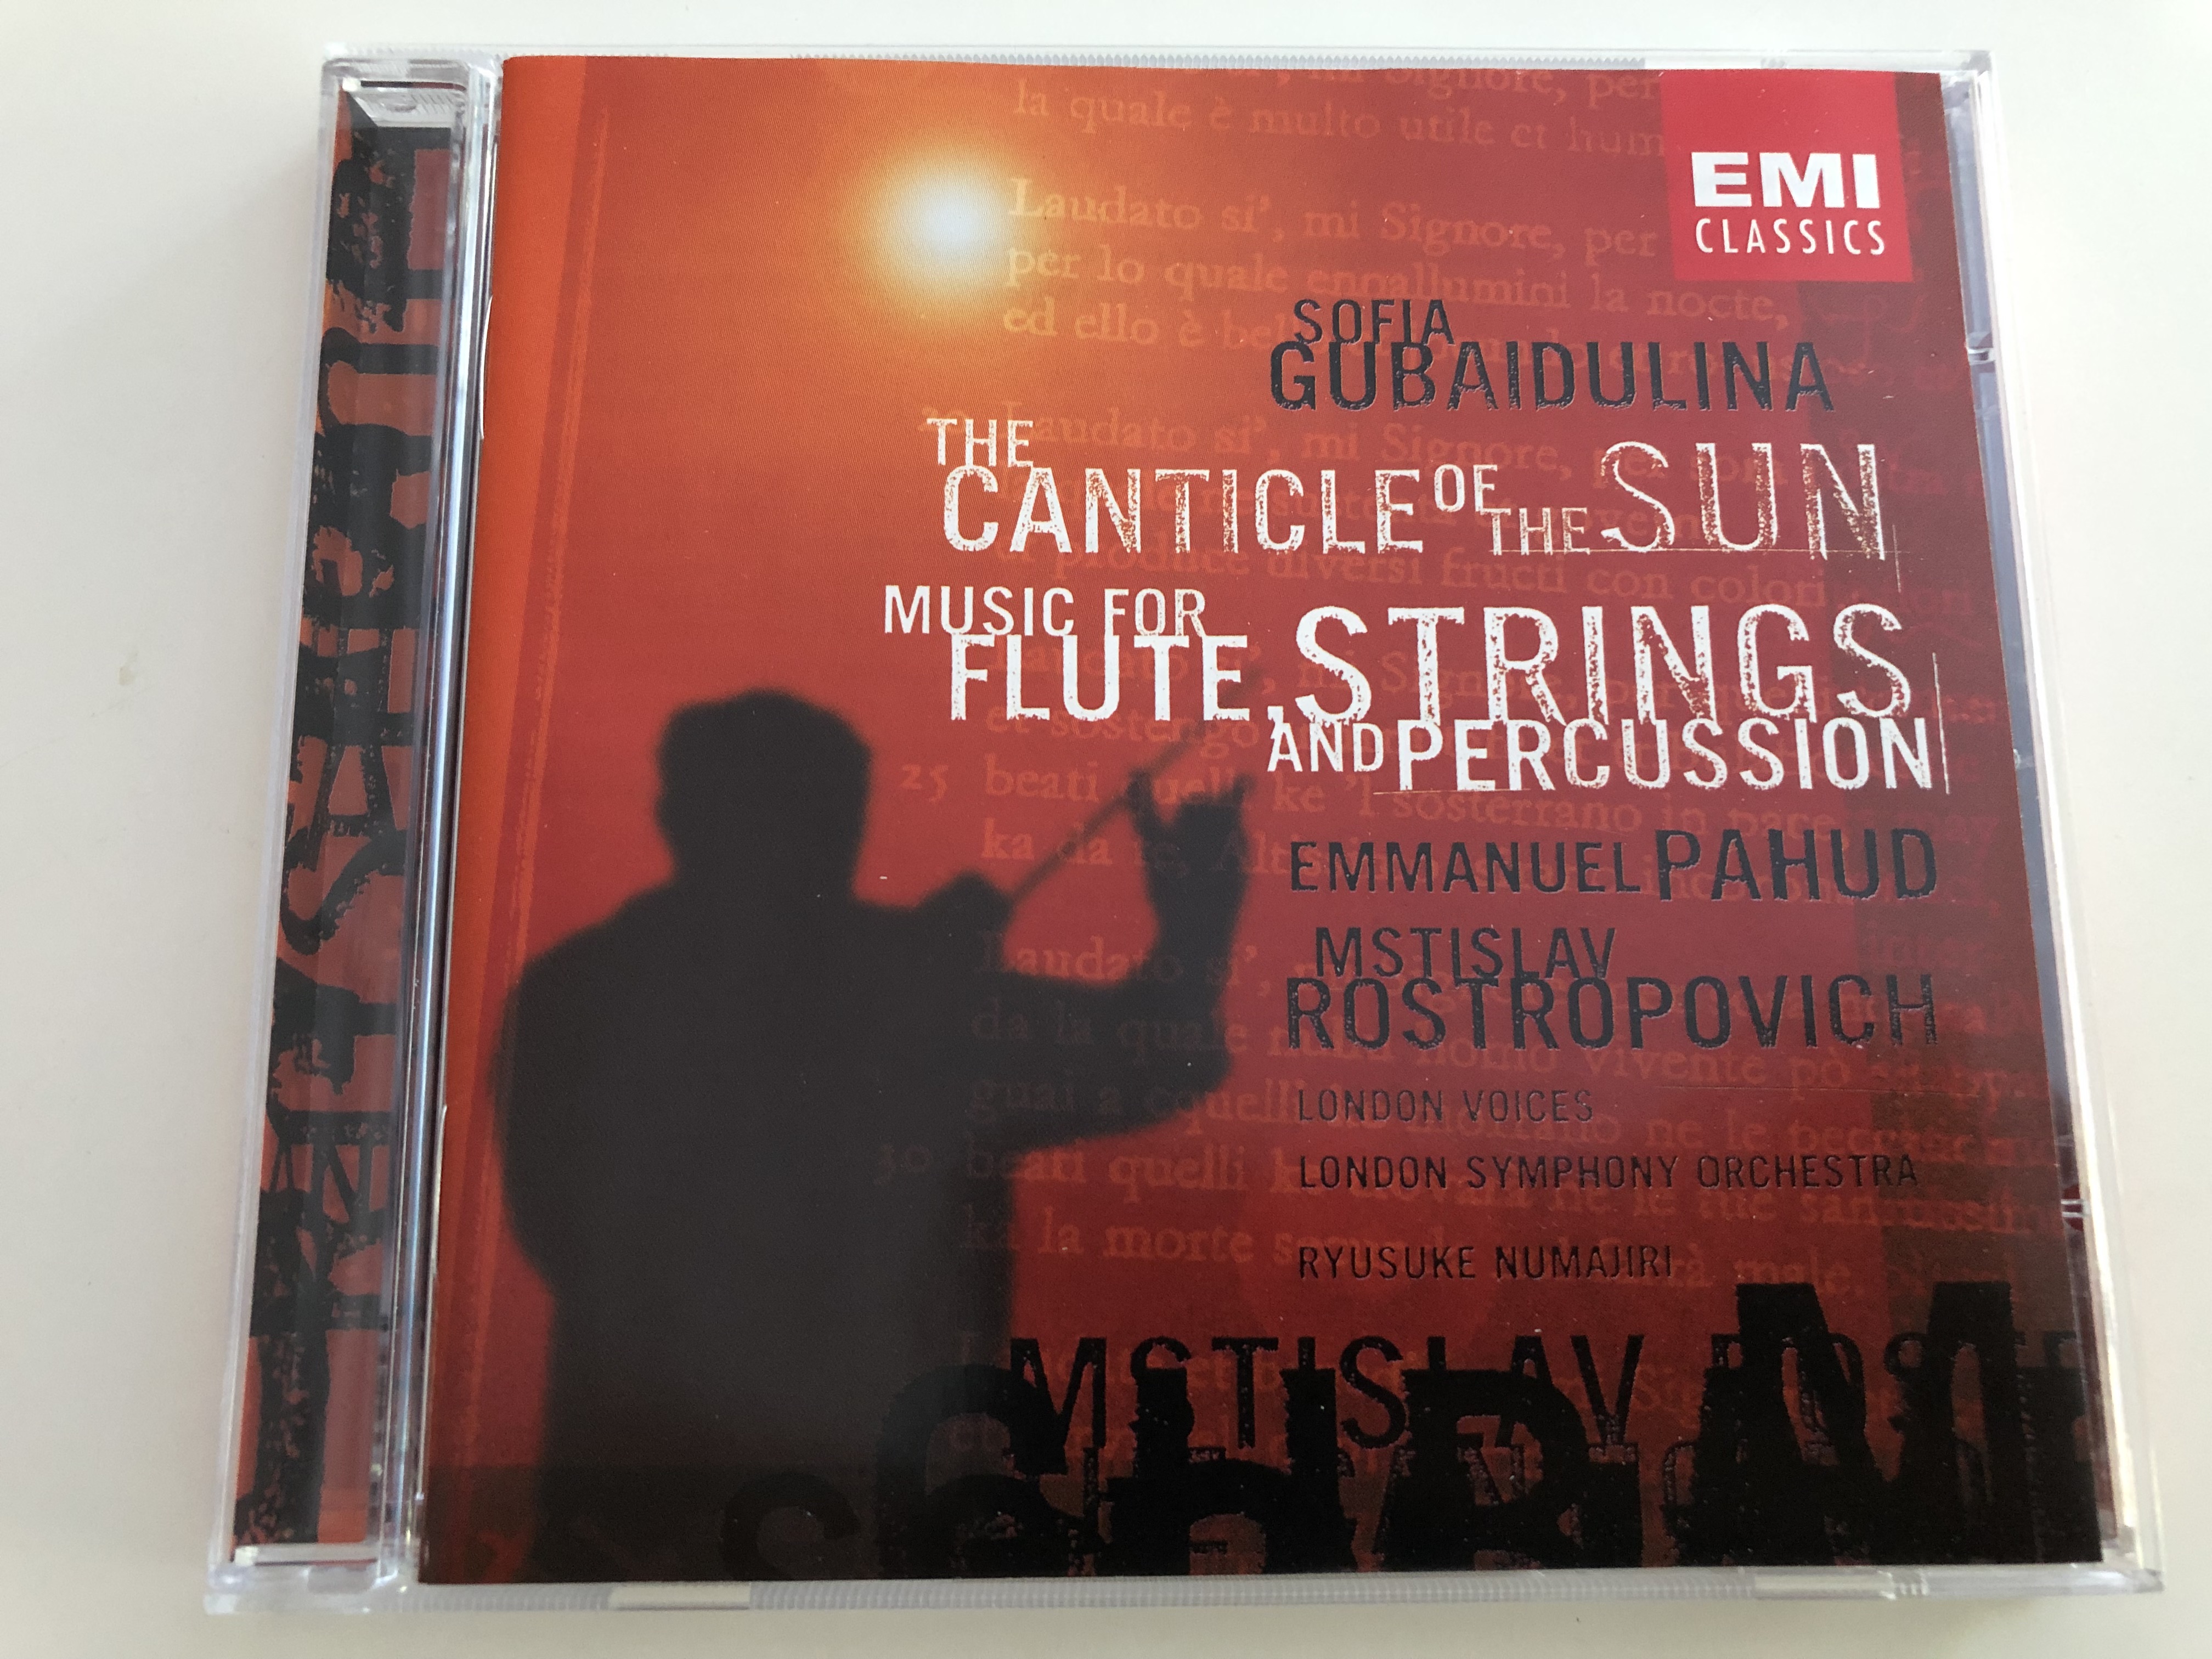 sofia-gubaidulina-the-canticle-of-the-sun-music-for-flute-strings-and-percussion-emmanuel-pahud-mstislav-rostopovich-london-voices-london-symphony-orchestra-ryusuke-numajiri-emi-classics-audio-cd-2001-1-.jpg